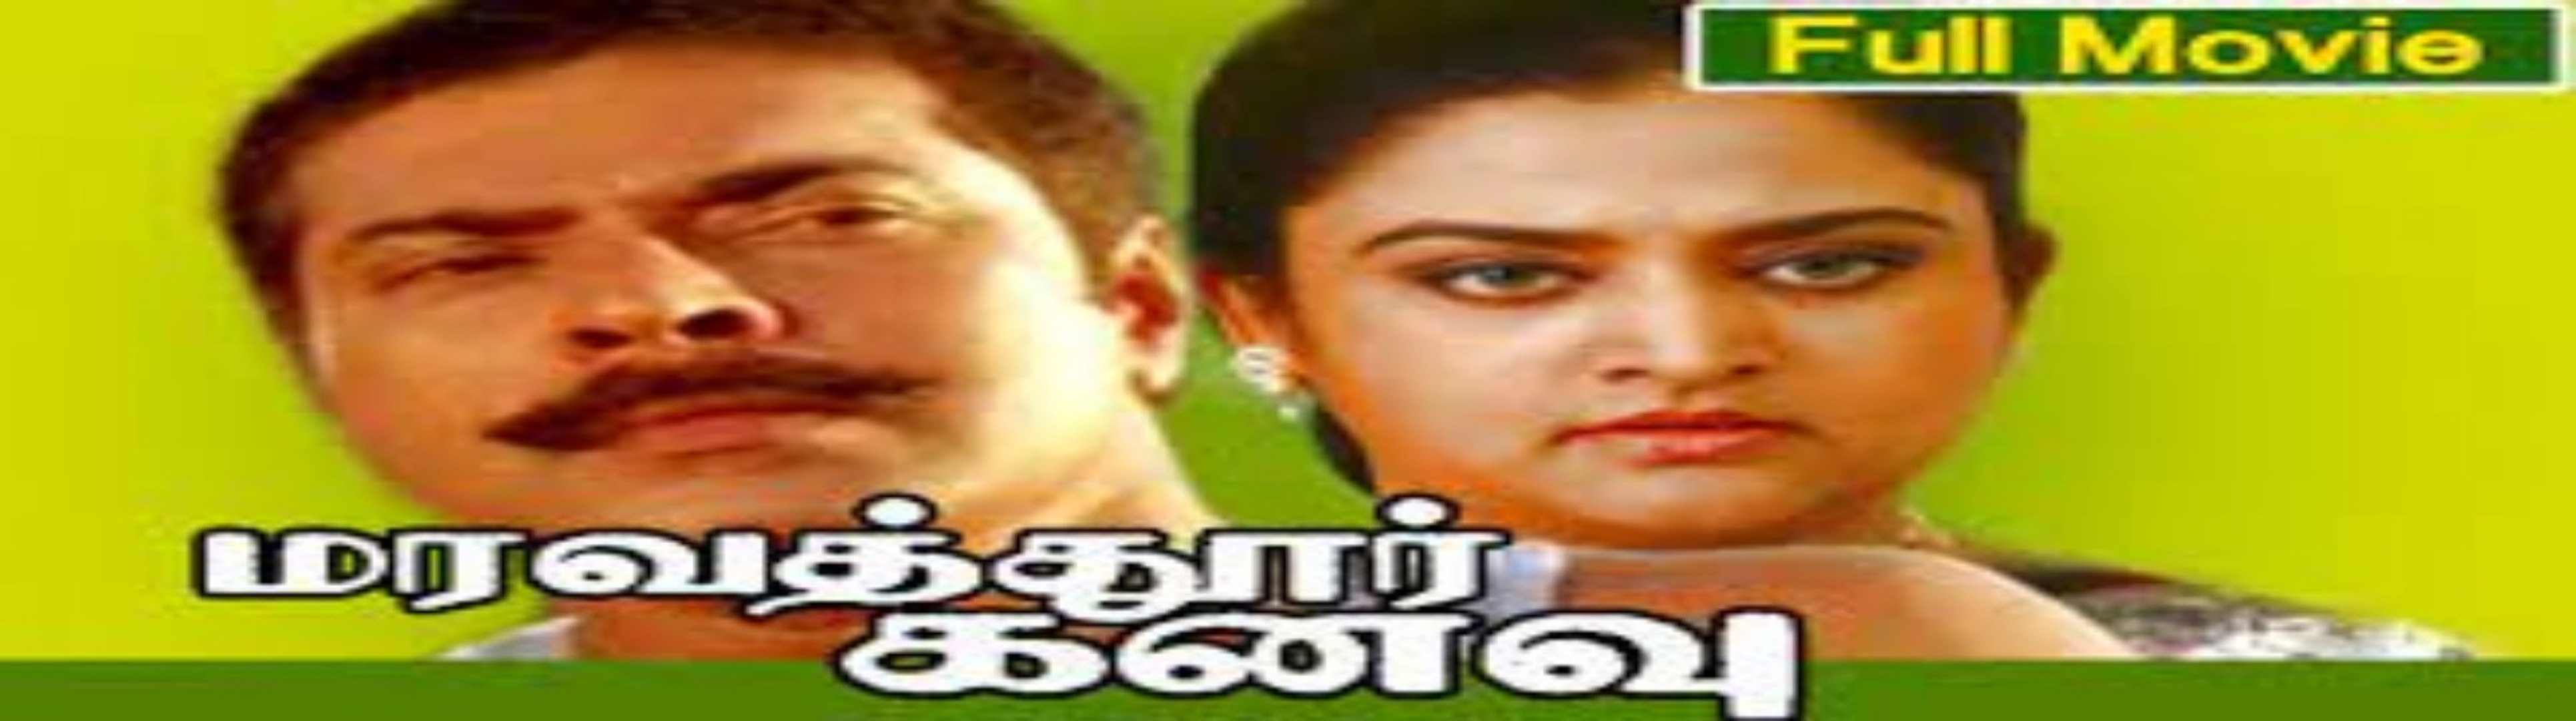 Thuruppugulan Tamil Full Movie, Mammootty Sneha, Dubbed Movie